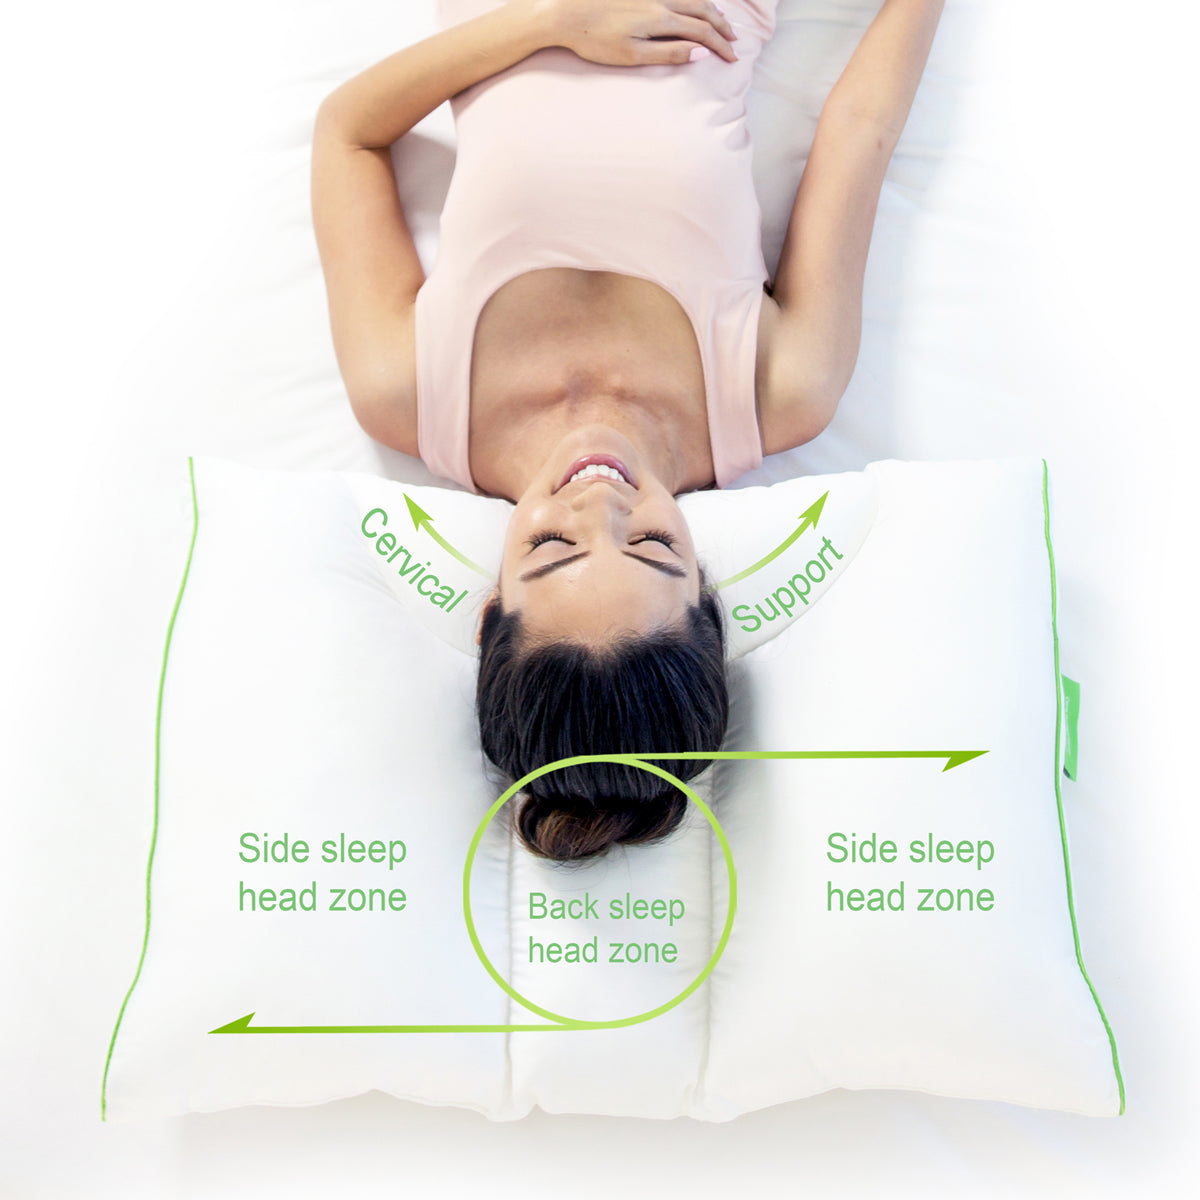 Sleep Yoga Multi Position Body Pillow